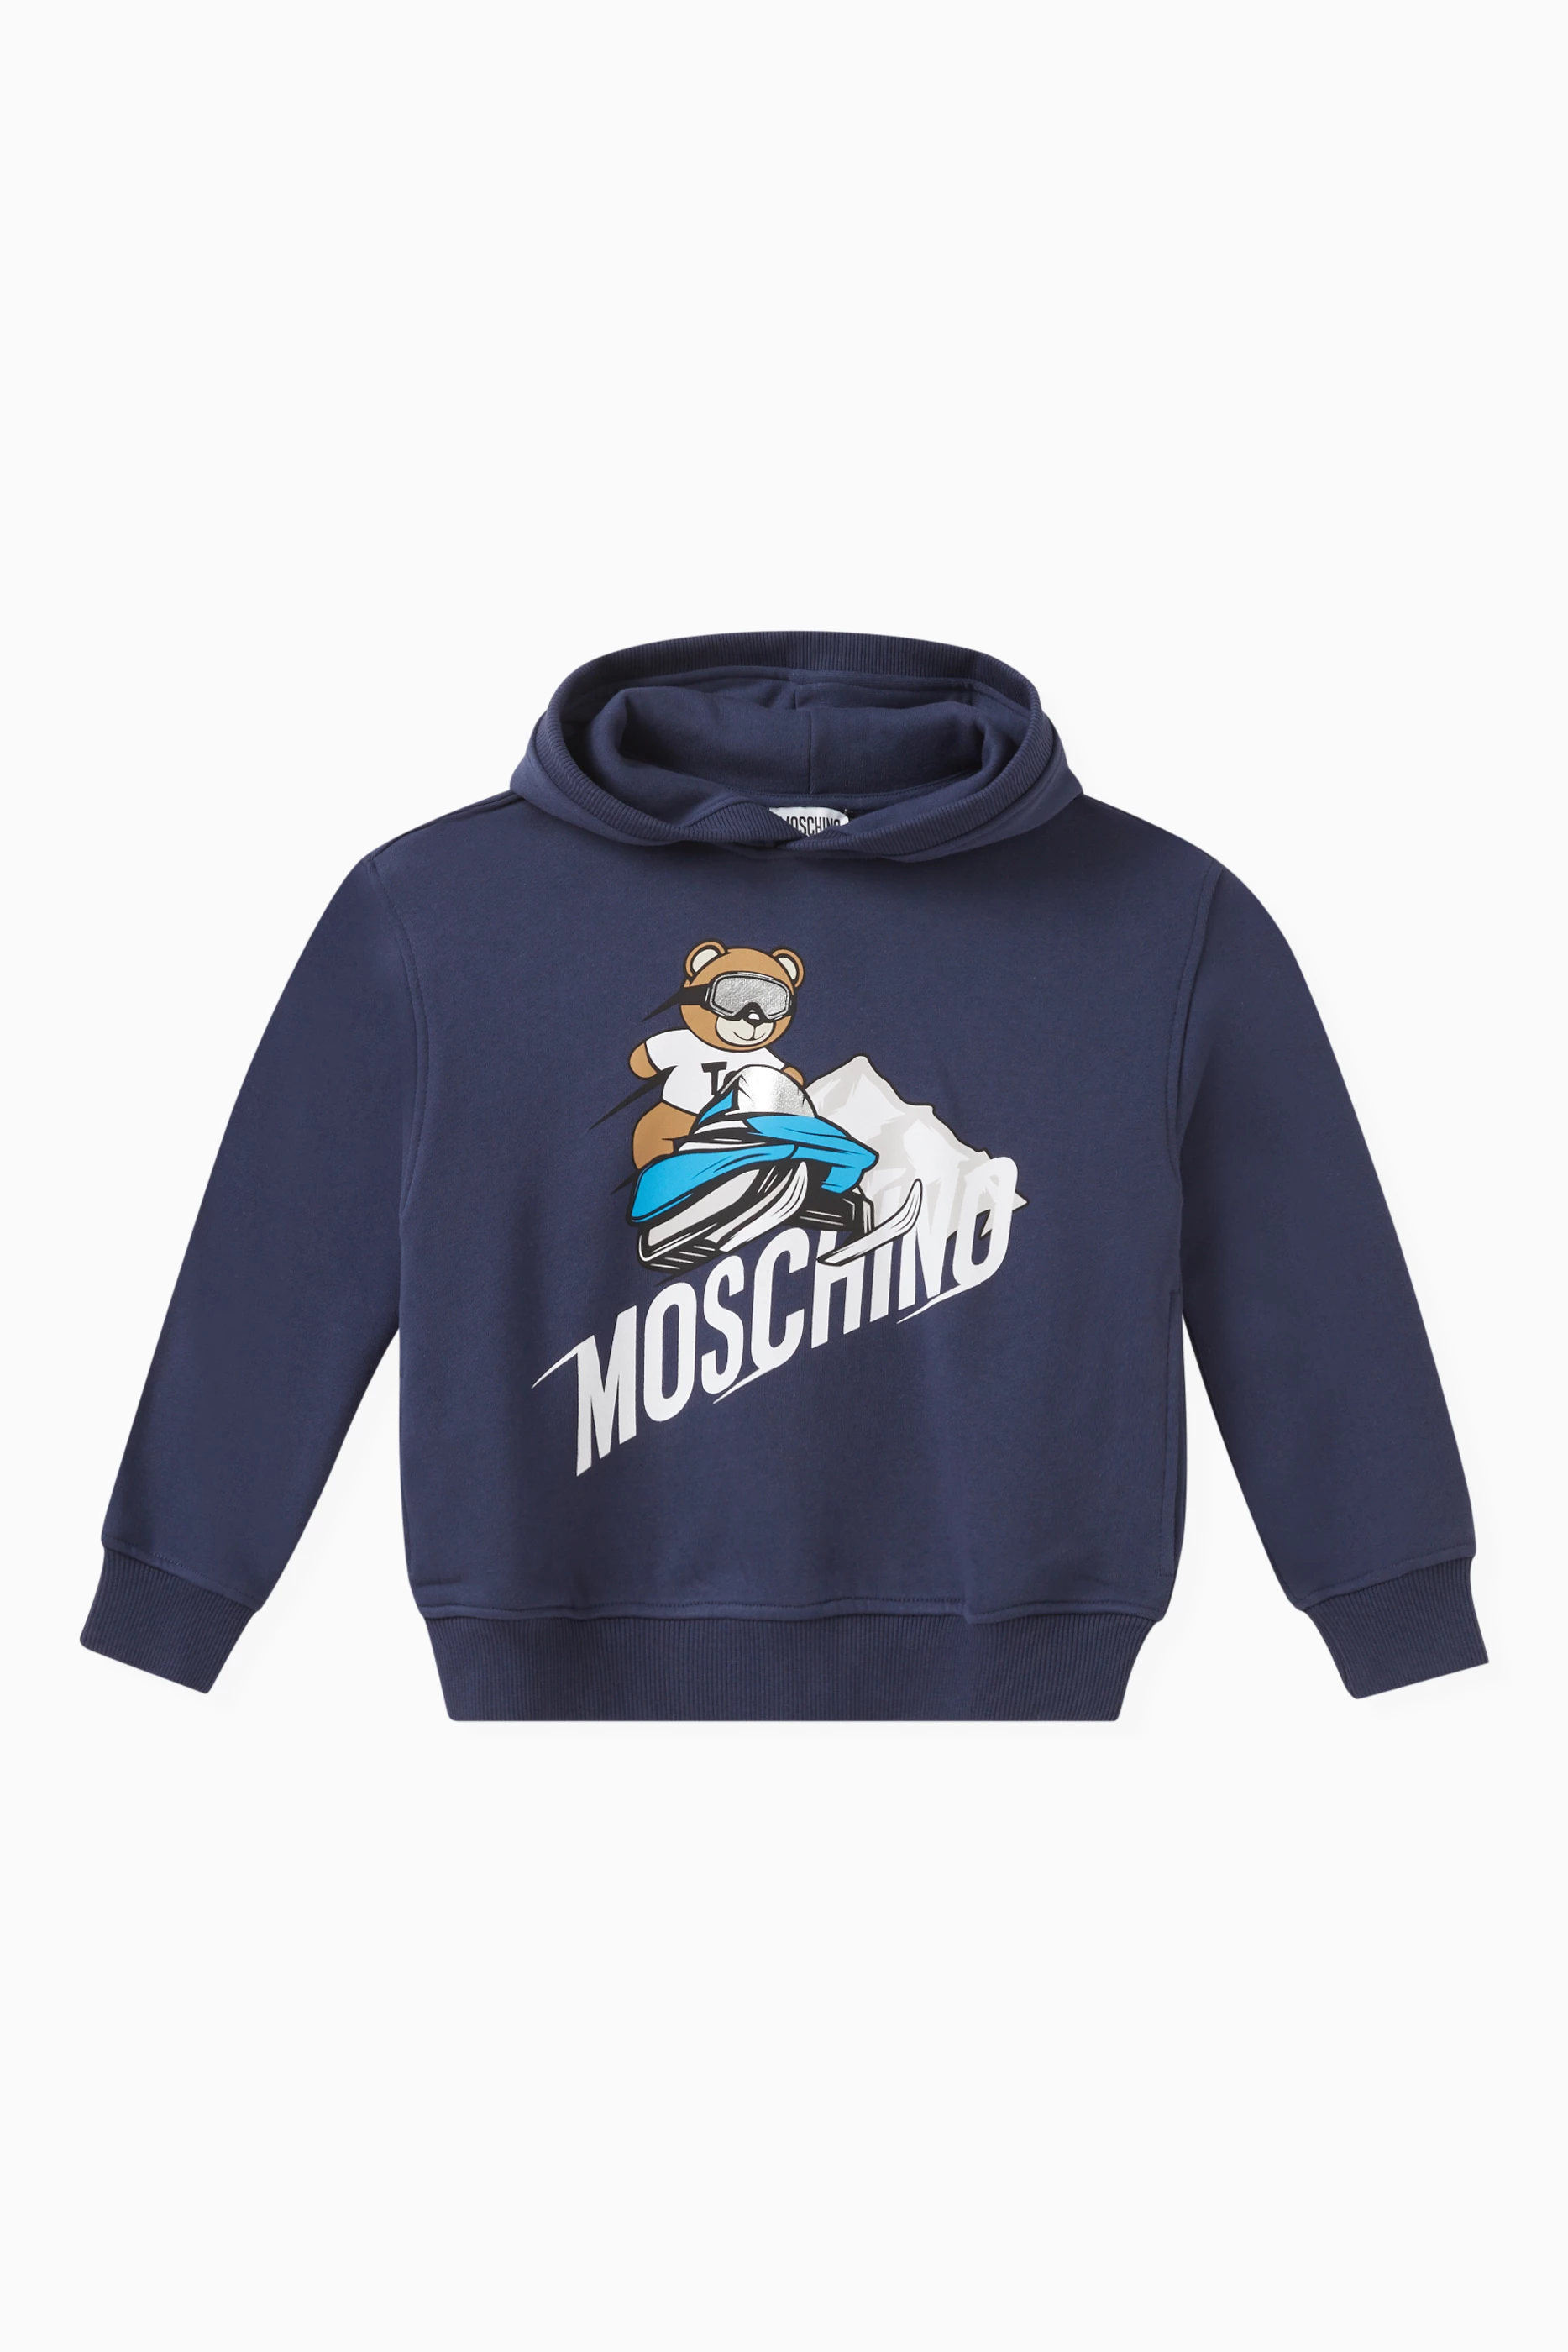 Moschino Teddy Bear hoodie